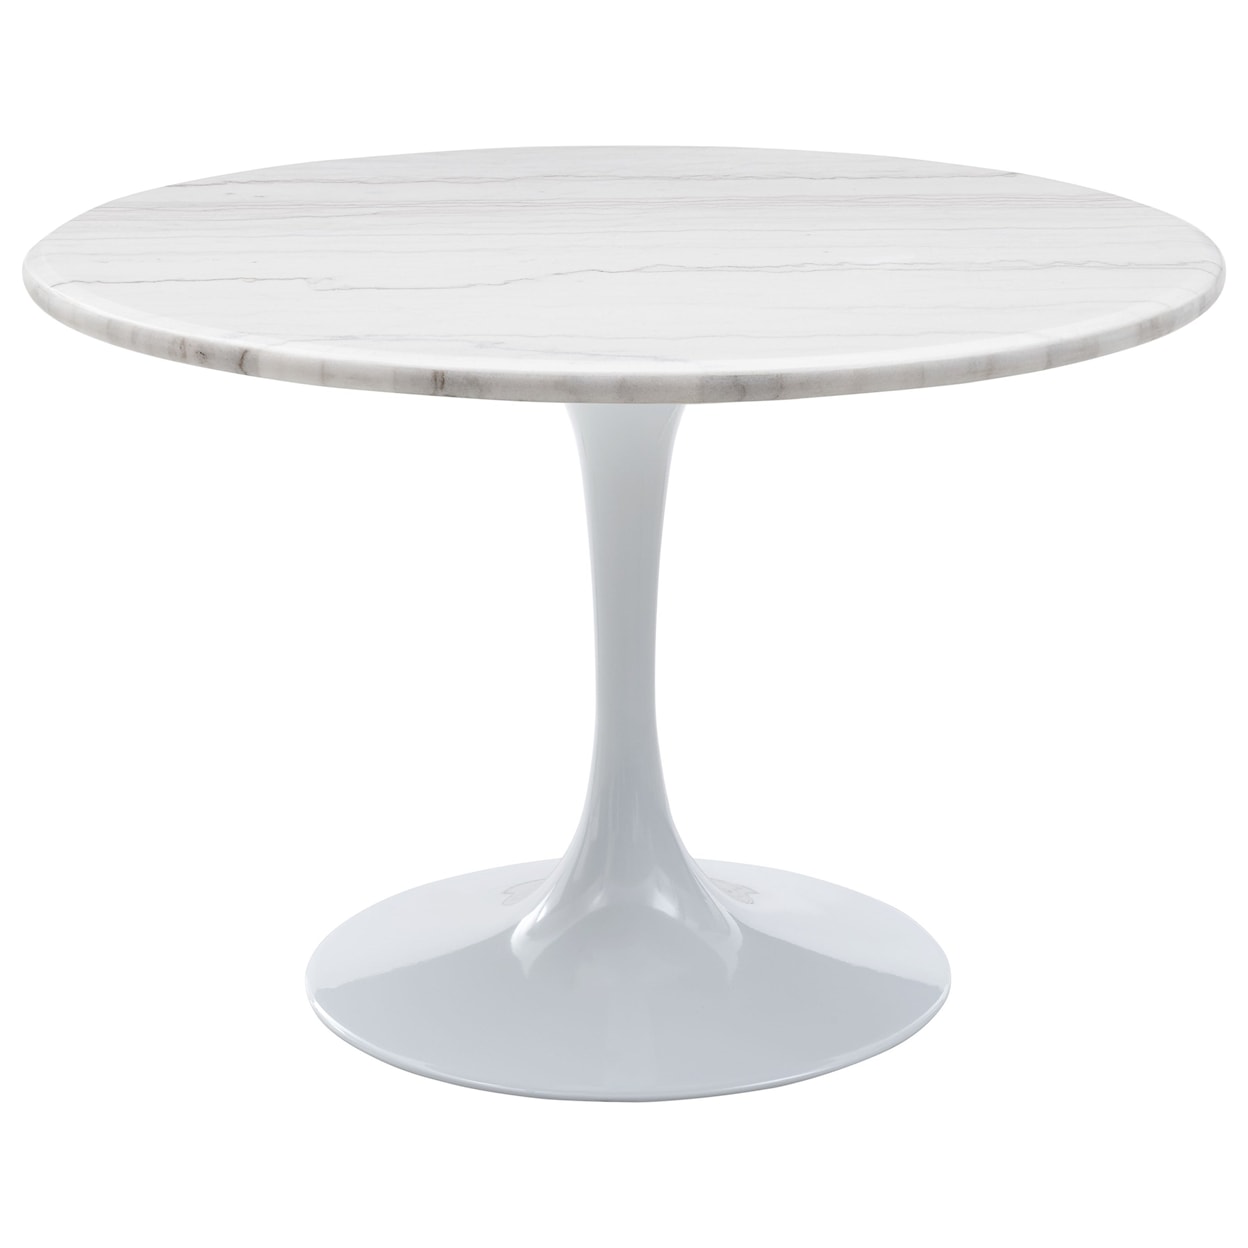 Steve Silver Colfax Table - White Top & White Base